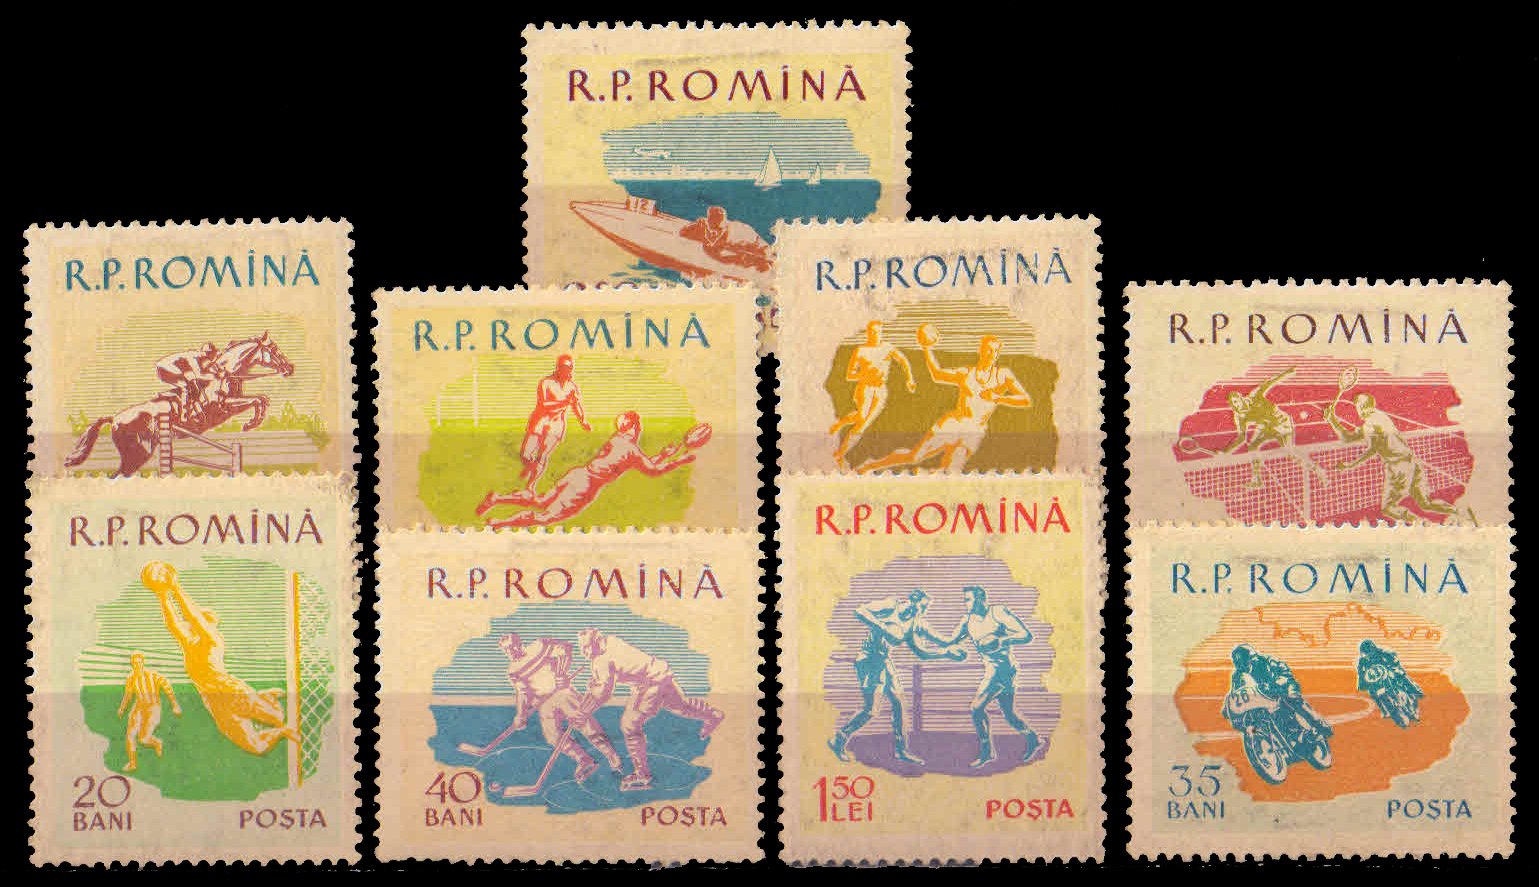 ROMANIA 1959-International Sports Football, Hockey, Boxing, Tennis, Set of 9, S.G. 2671 to 2679-Mint Hinged, Cat £ 18-